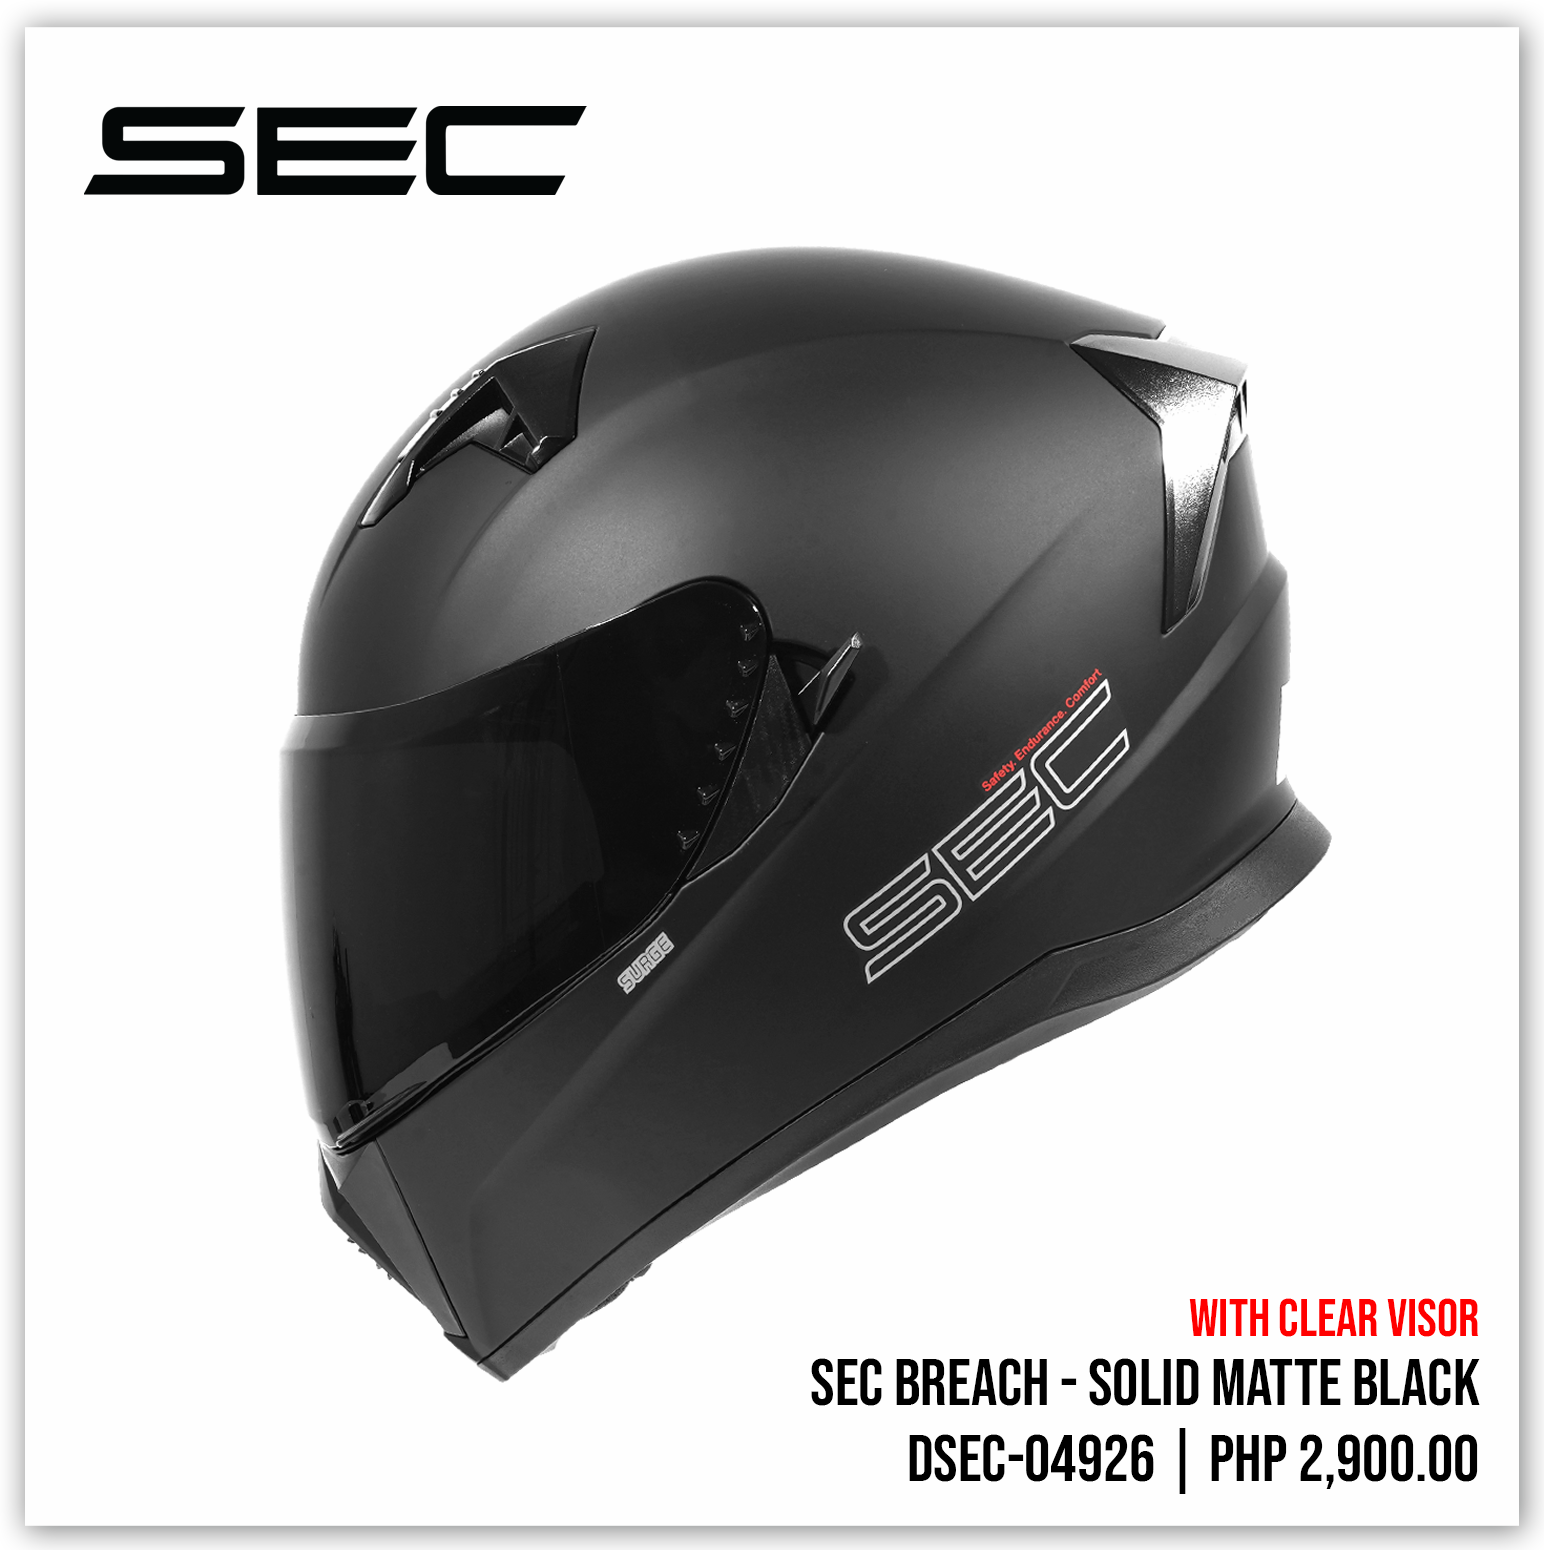 SEC Breach - Solid Matte Black